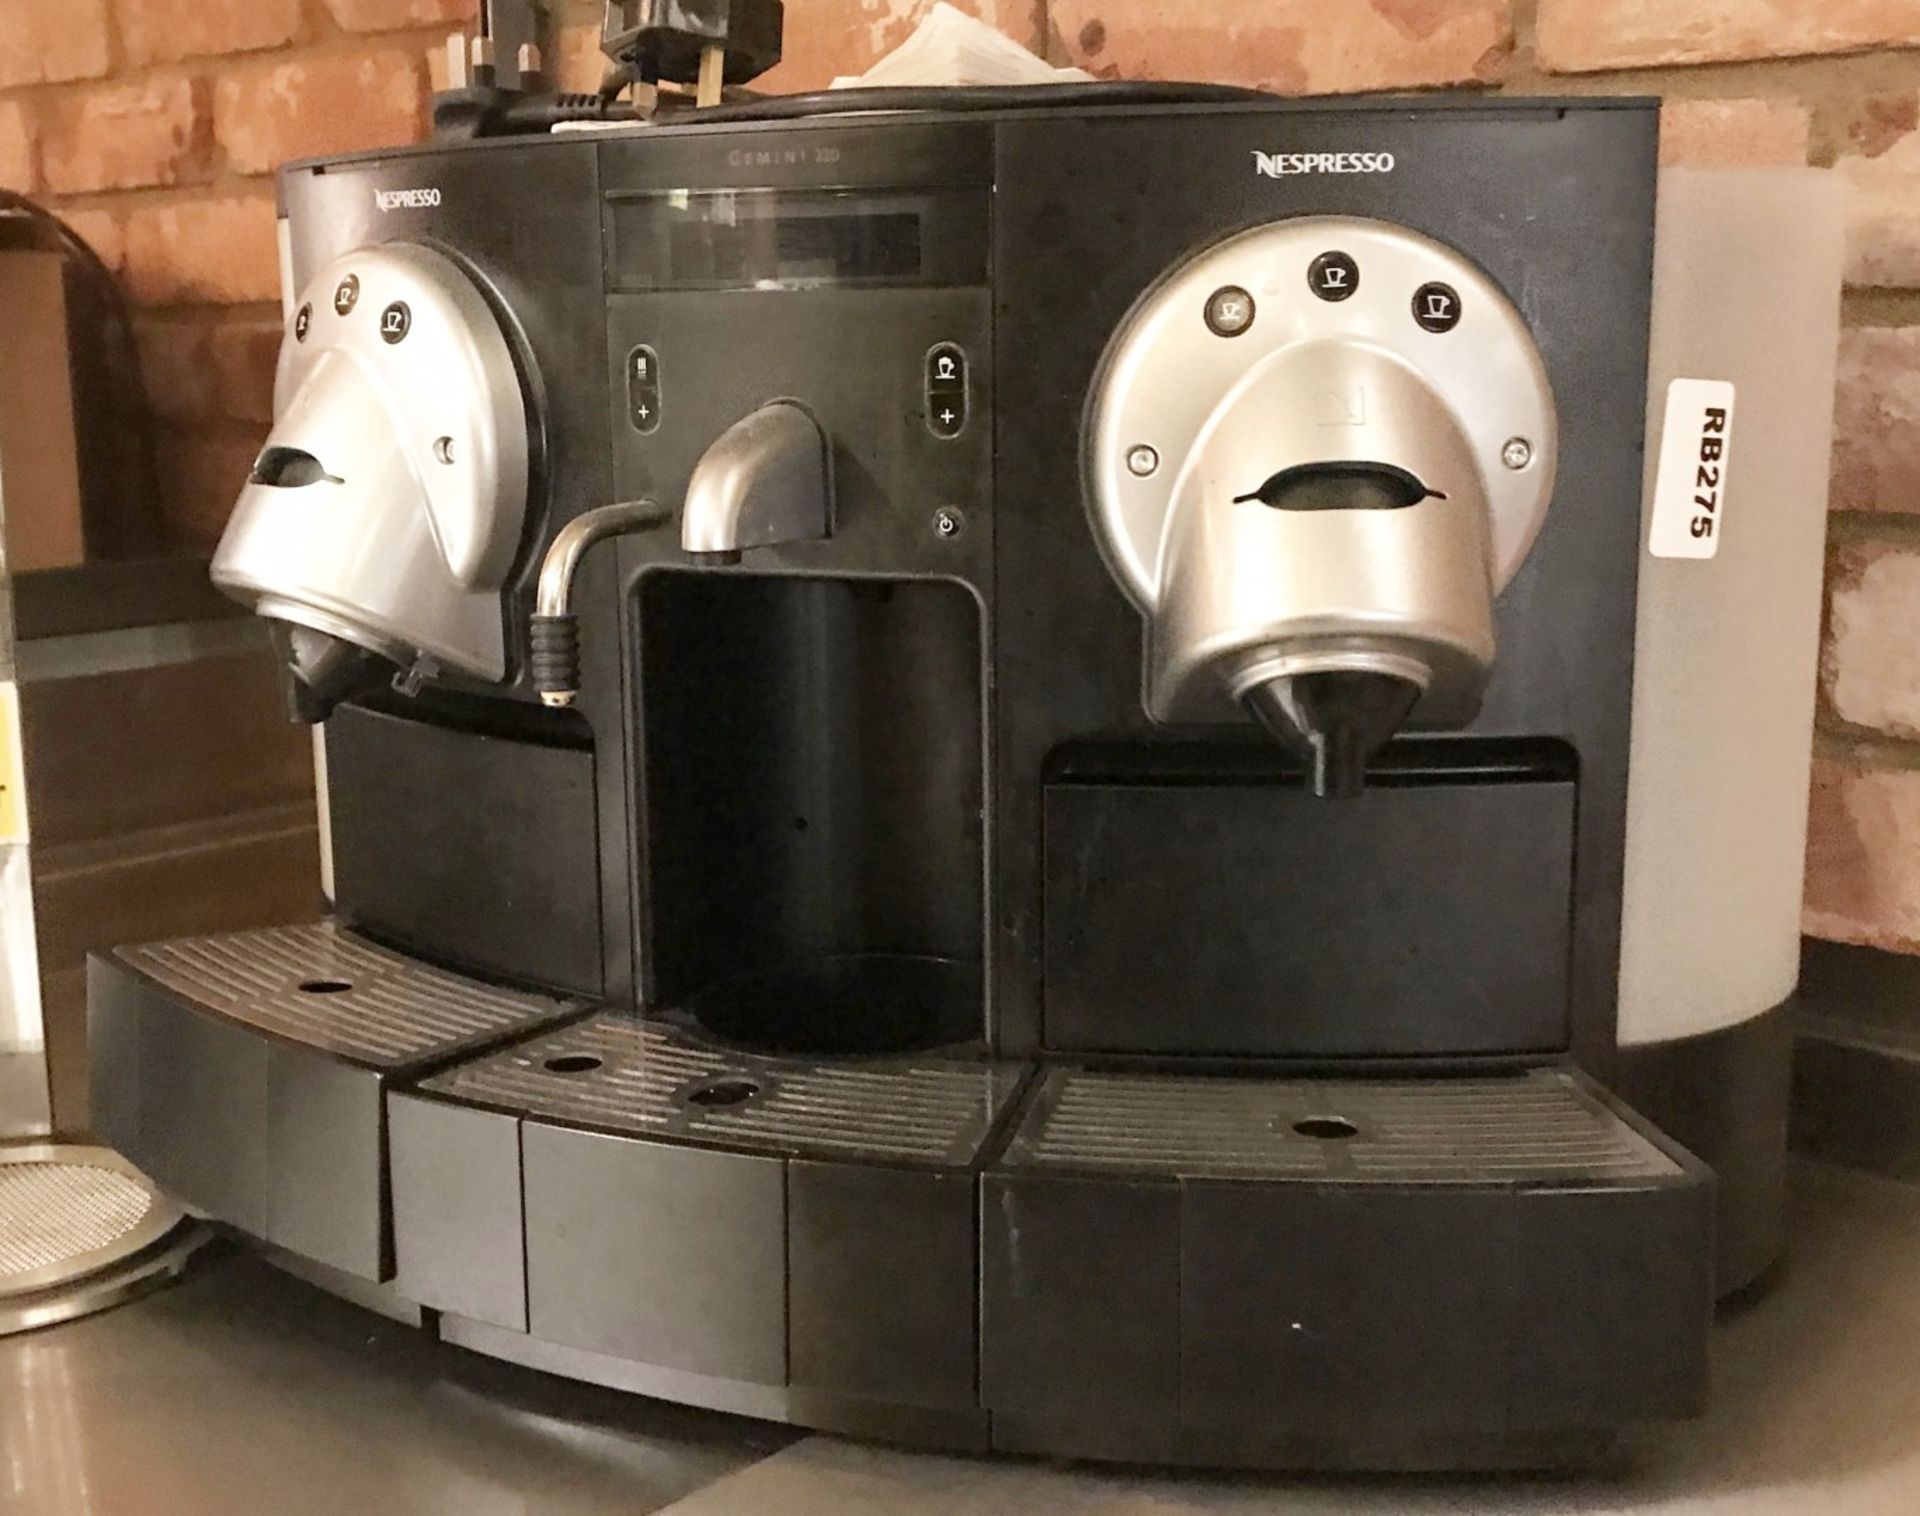 1 x Nespresso Gemini CS220 Pro Coffee Machine With Pod Holder and Pods - RRP £2,300 - Ref: RB275 -